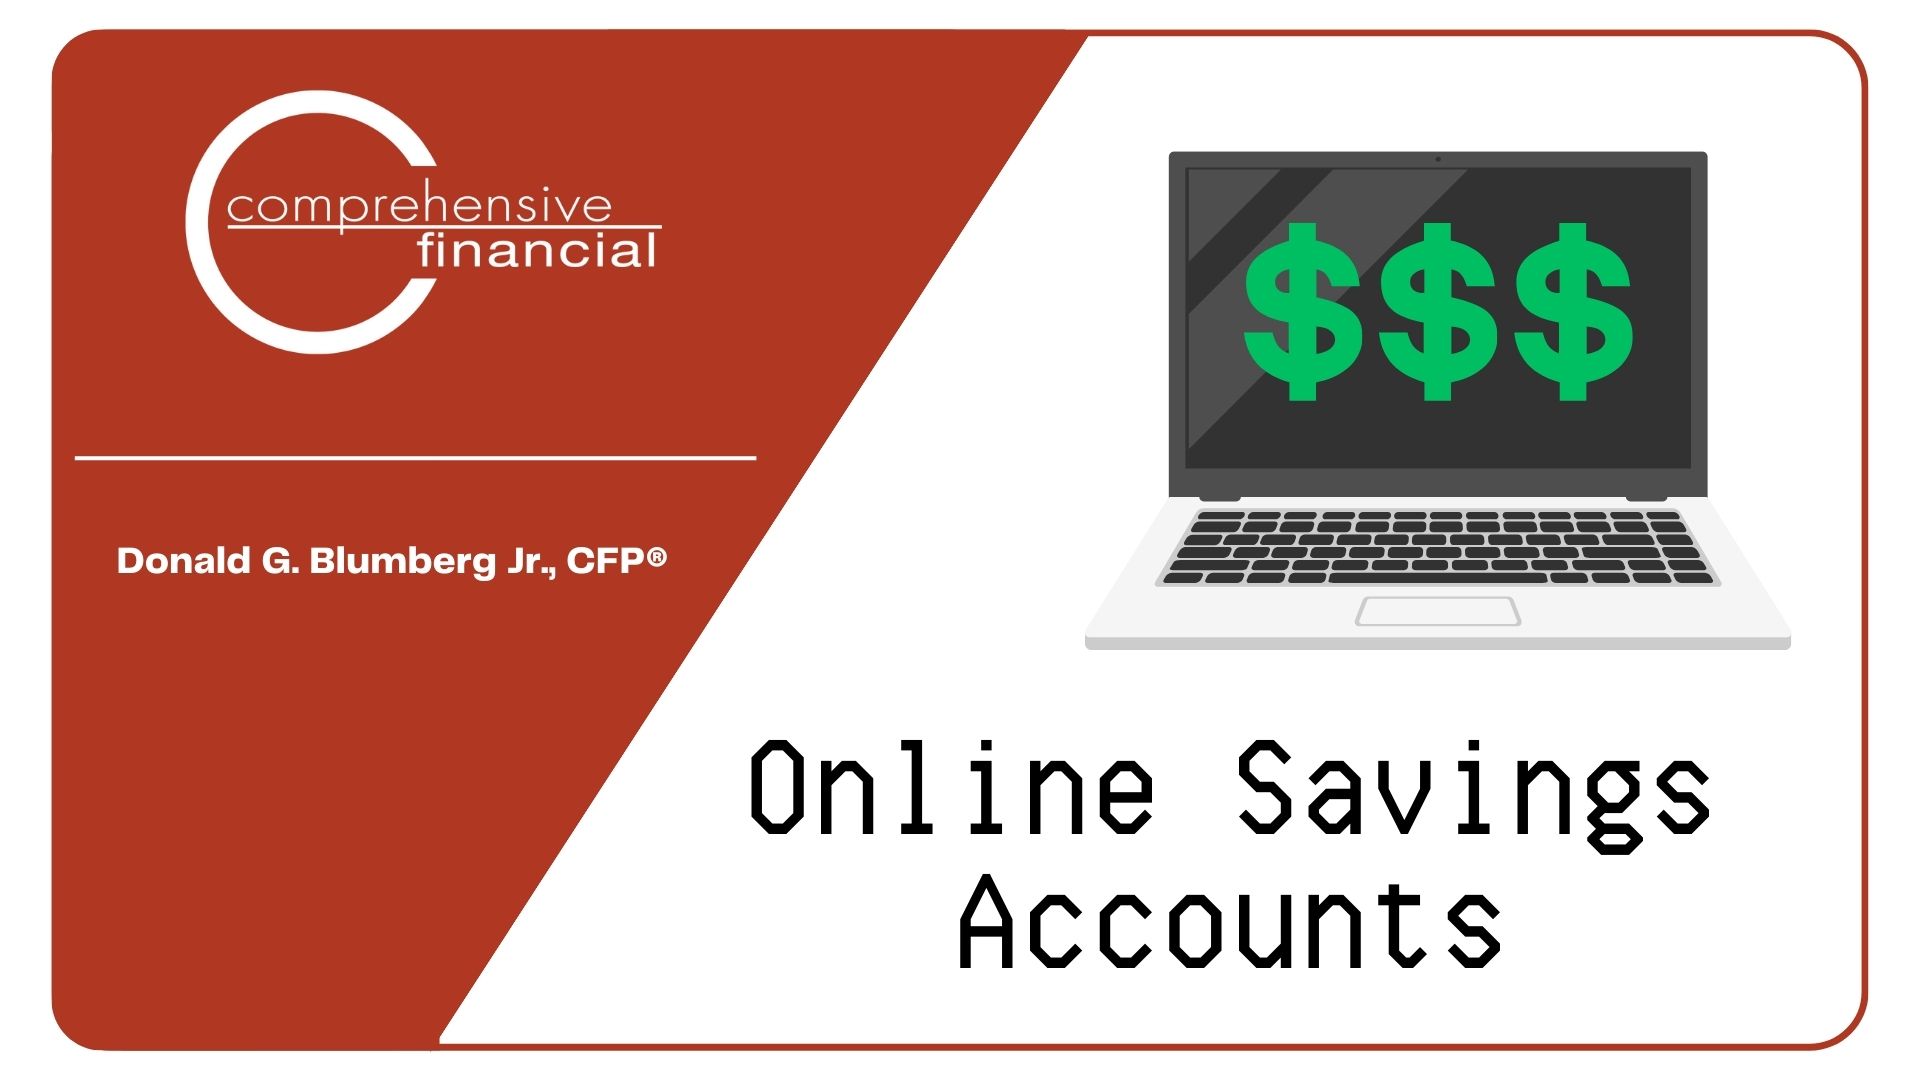 Online Savings Account